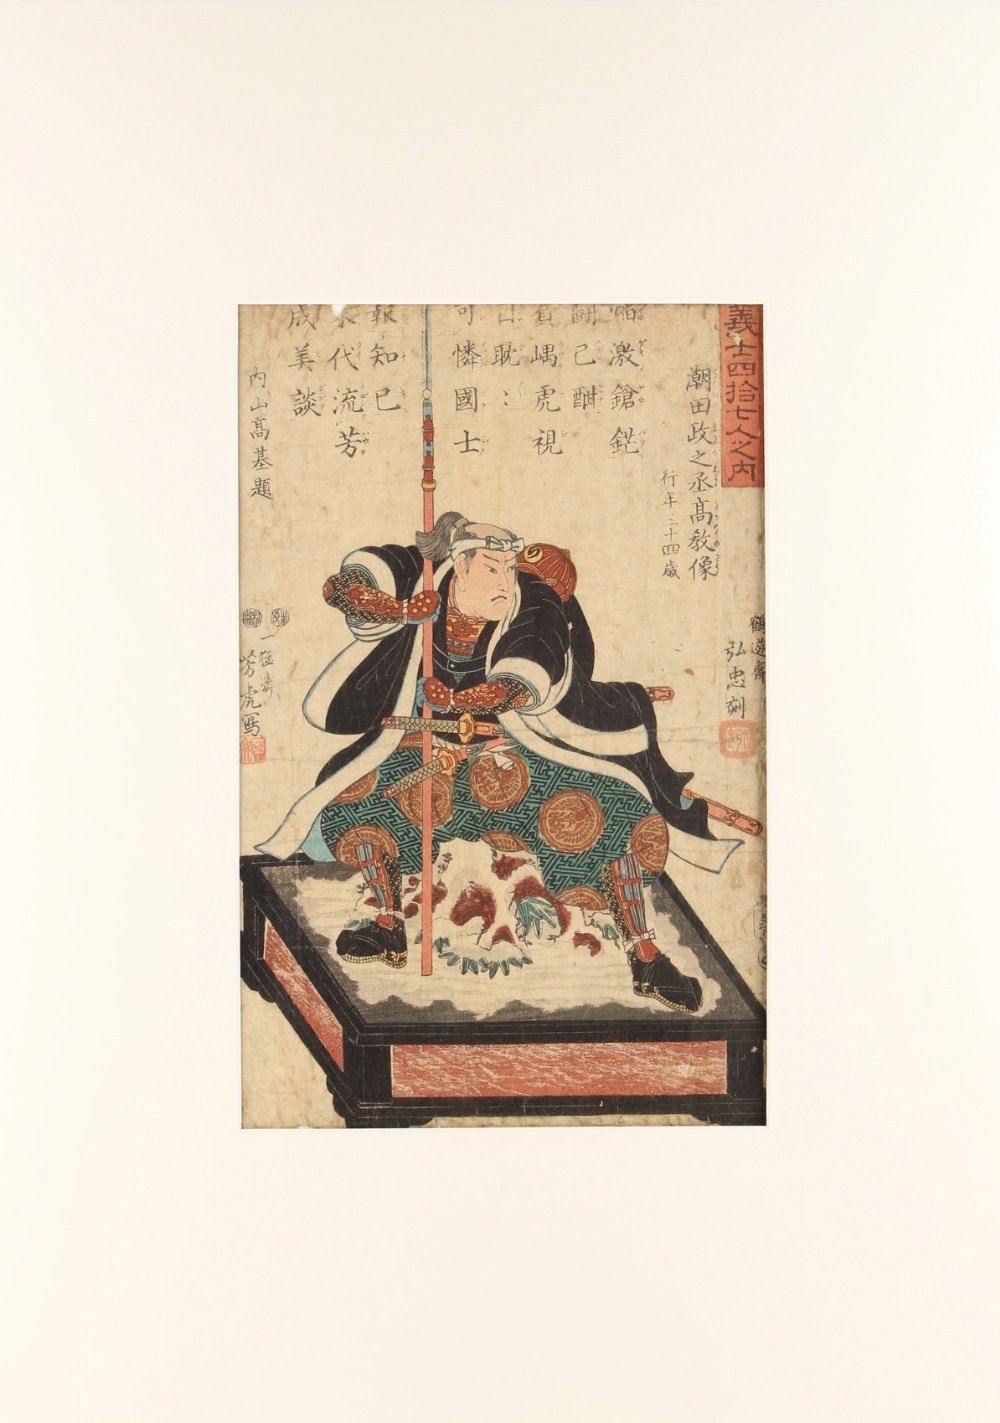 Utagawa Yoshitora (fl.1850-1880) - USHIODA MASANOJO TAKANORI from 47 FAITHFUL SAMURAI - woodblock